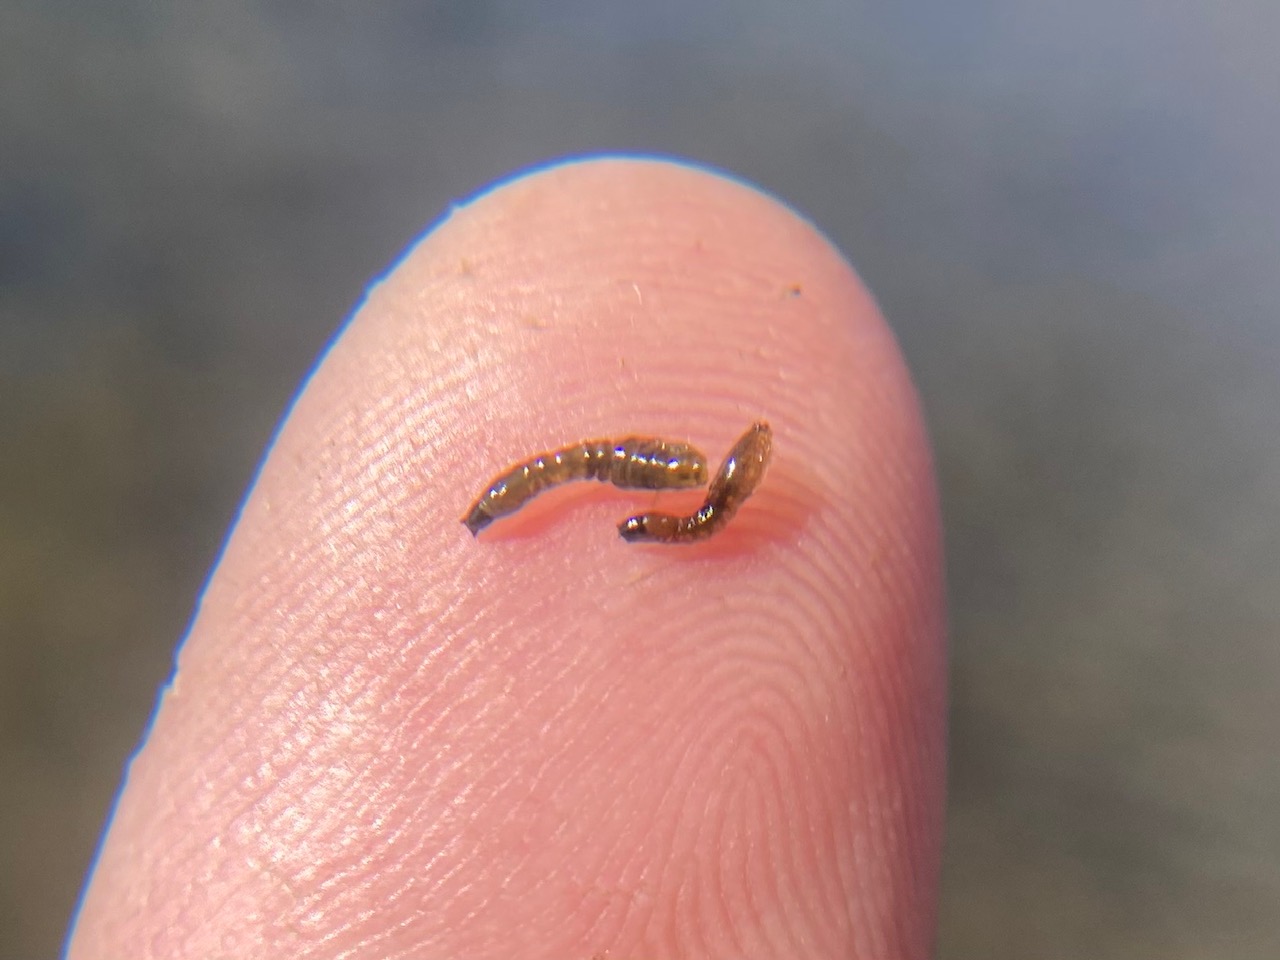 Larva live for fishing stock image. Image of crawl, diet - 159779685